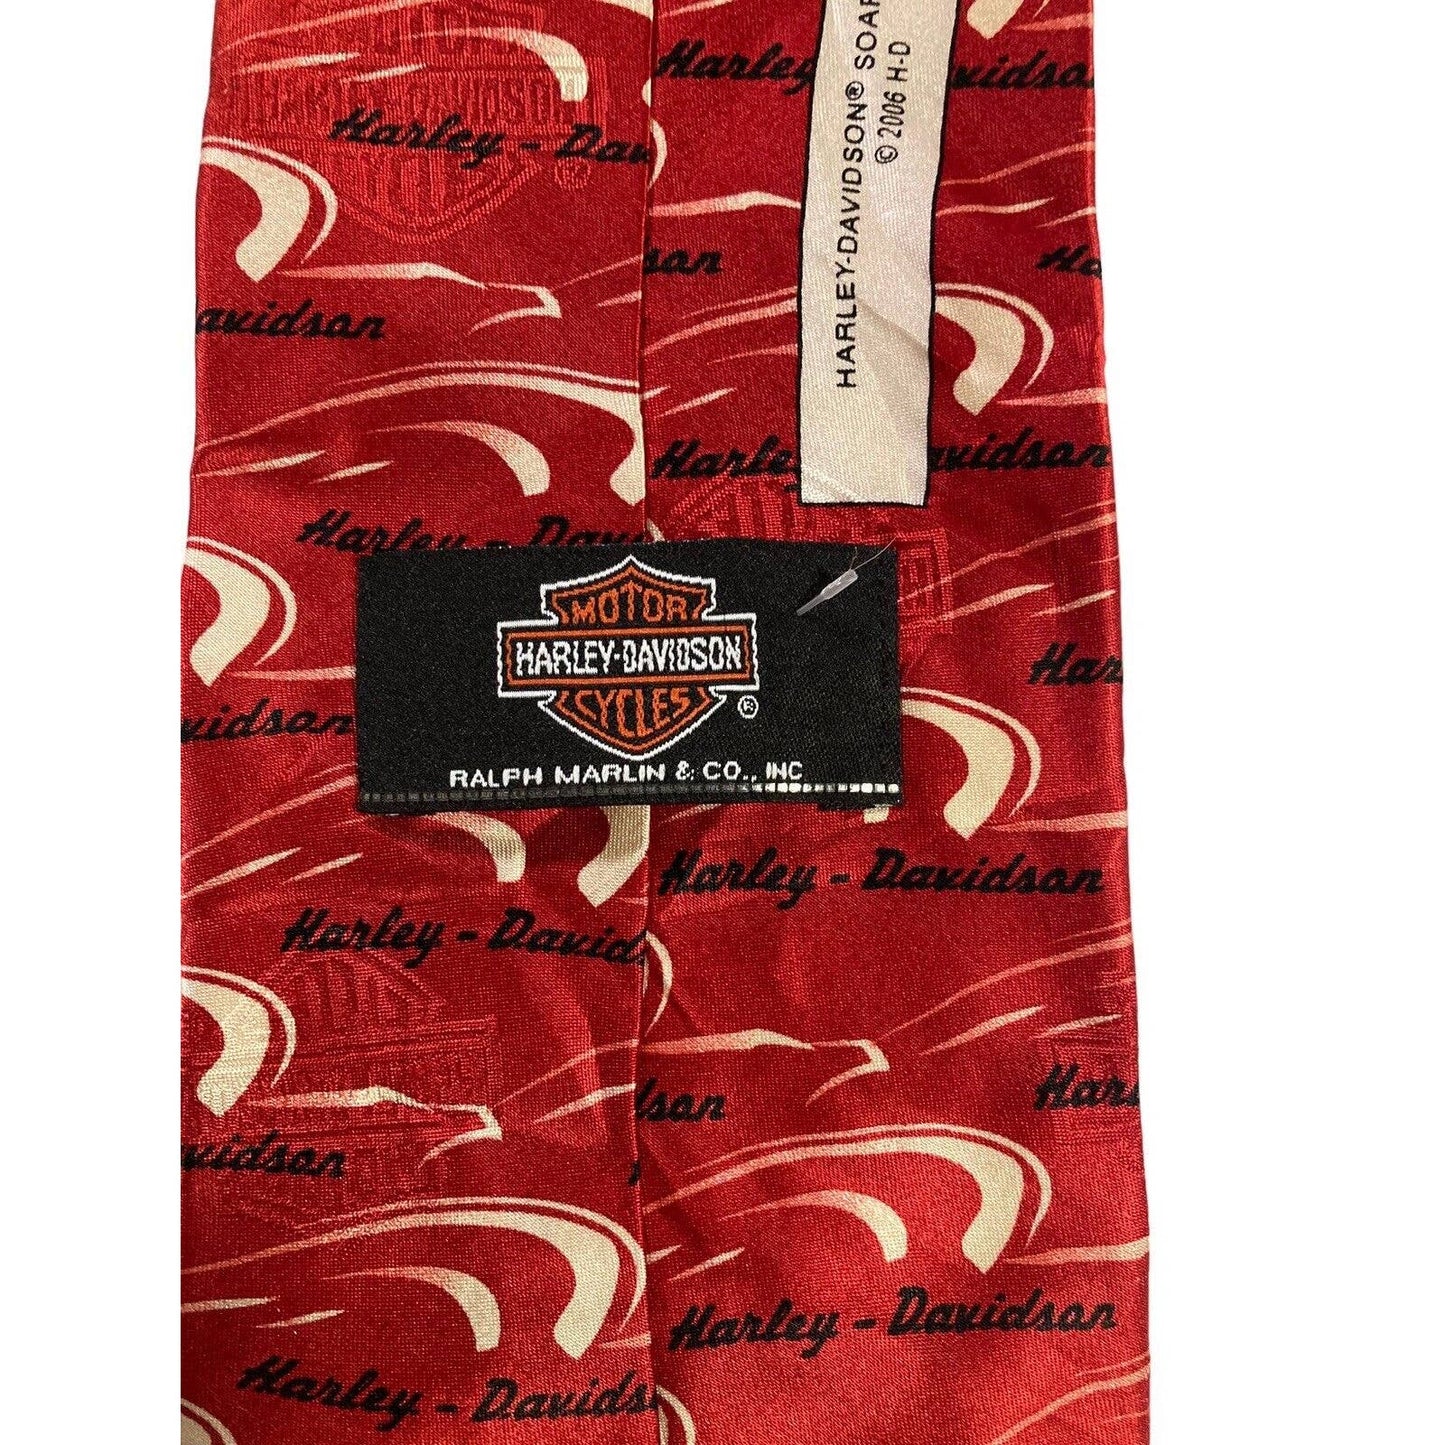 Ralph Marlin Harley Davidson Soaring Eagle Logo 2006 Novelty Necktie 100% Silk